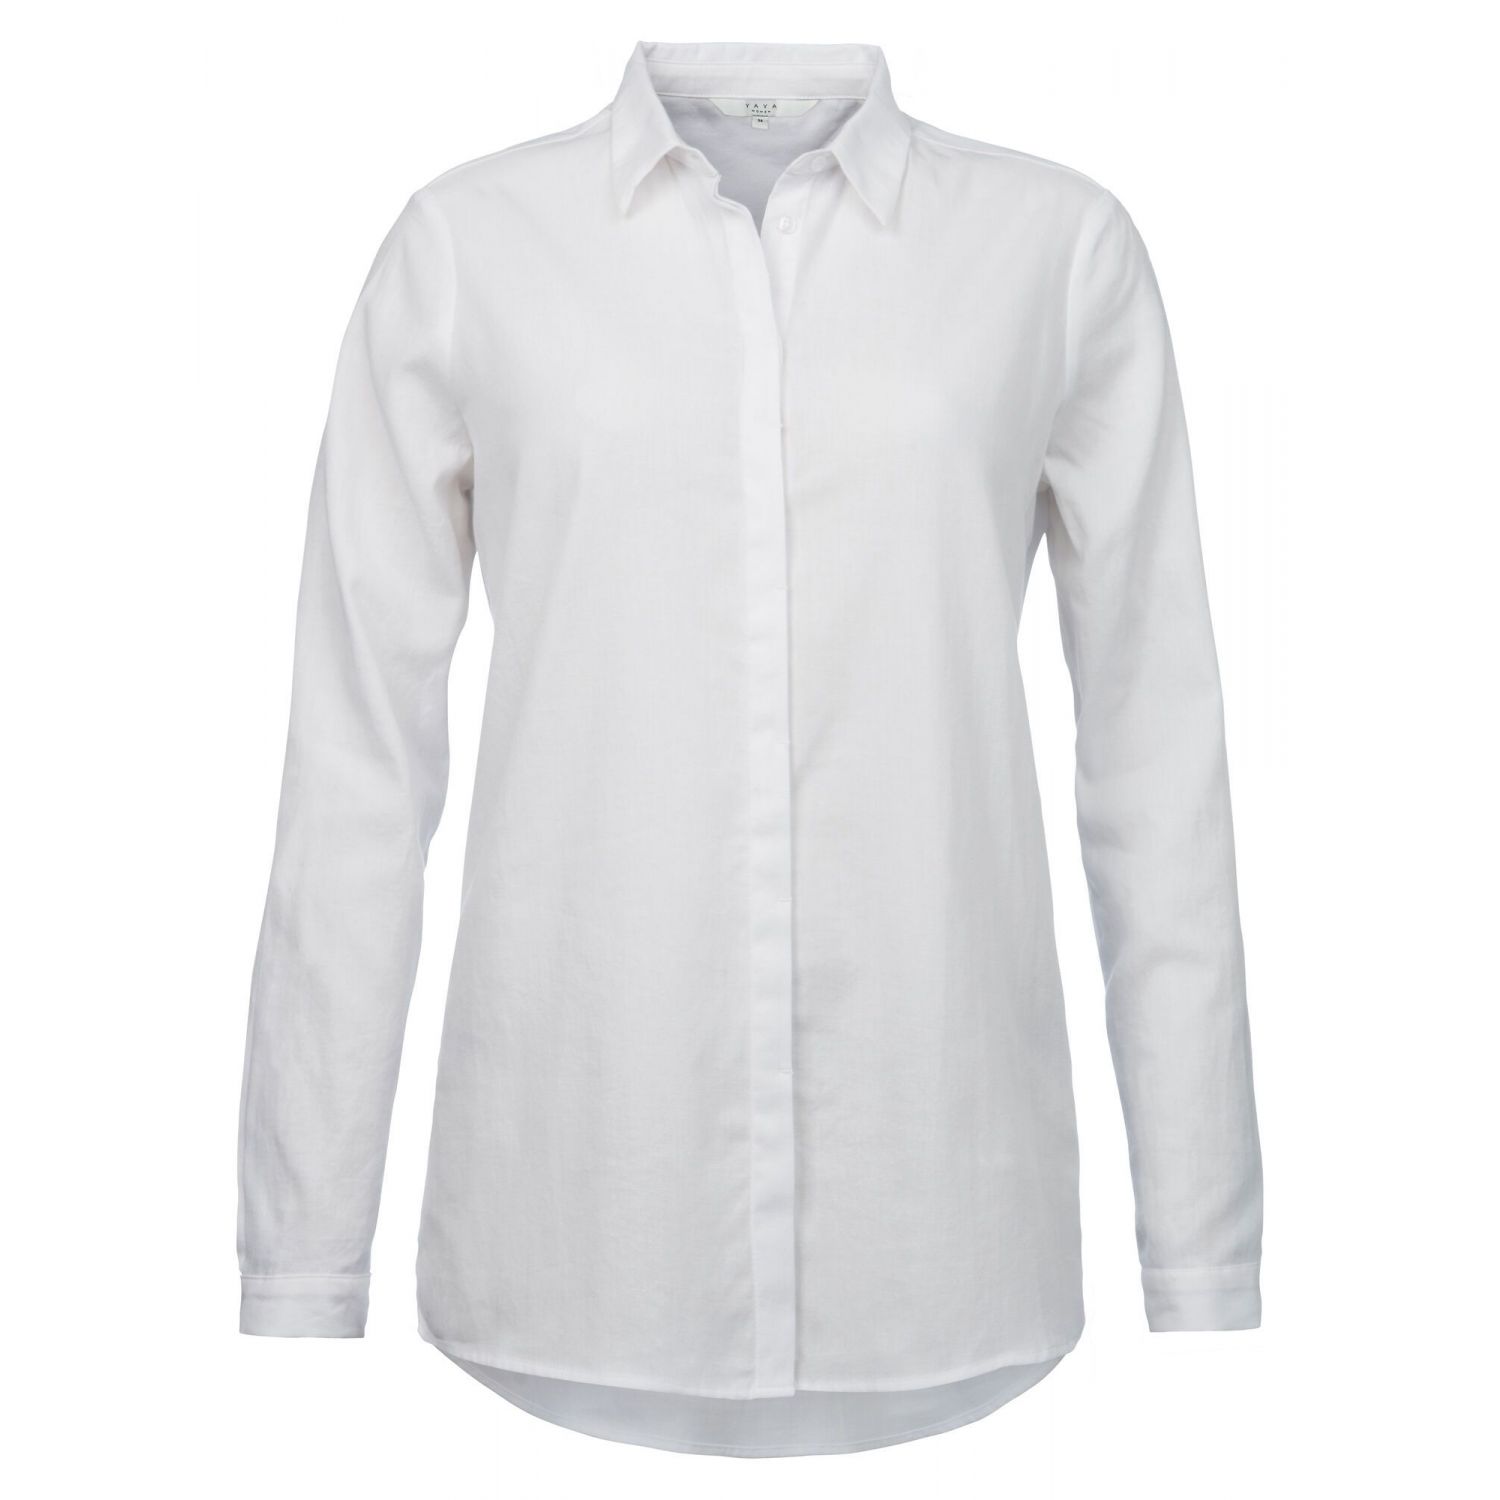 Yaya cotton shirt pure white